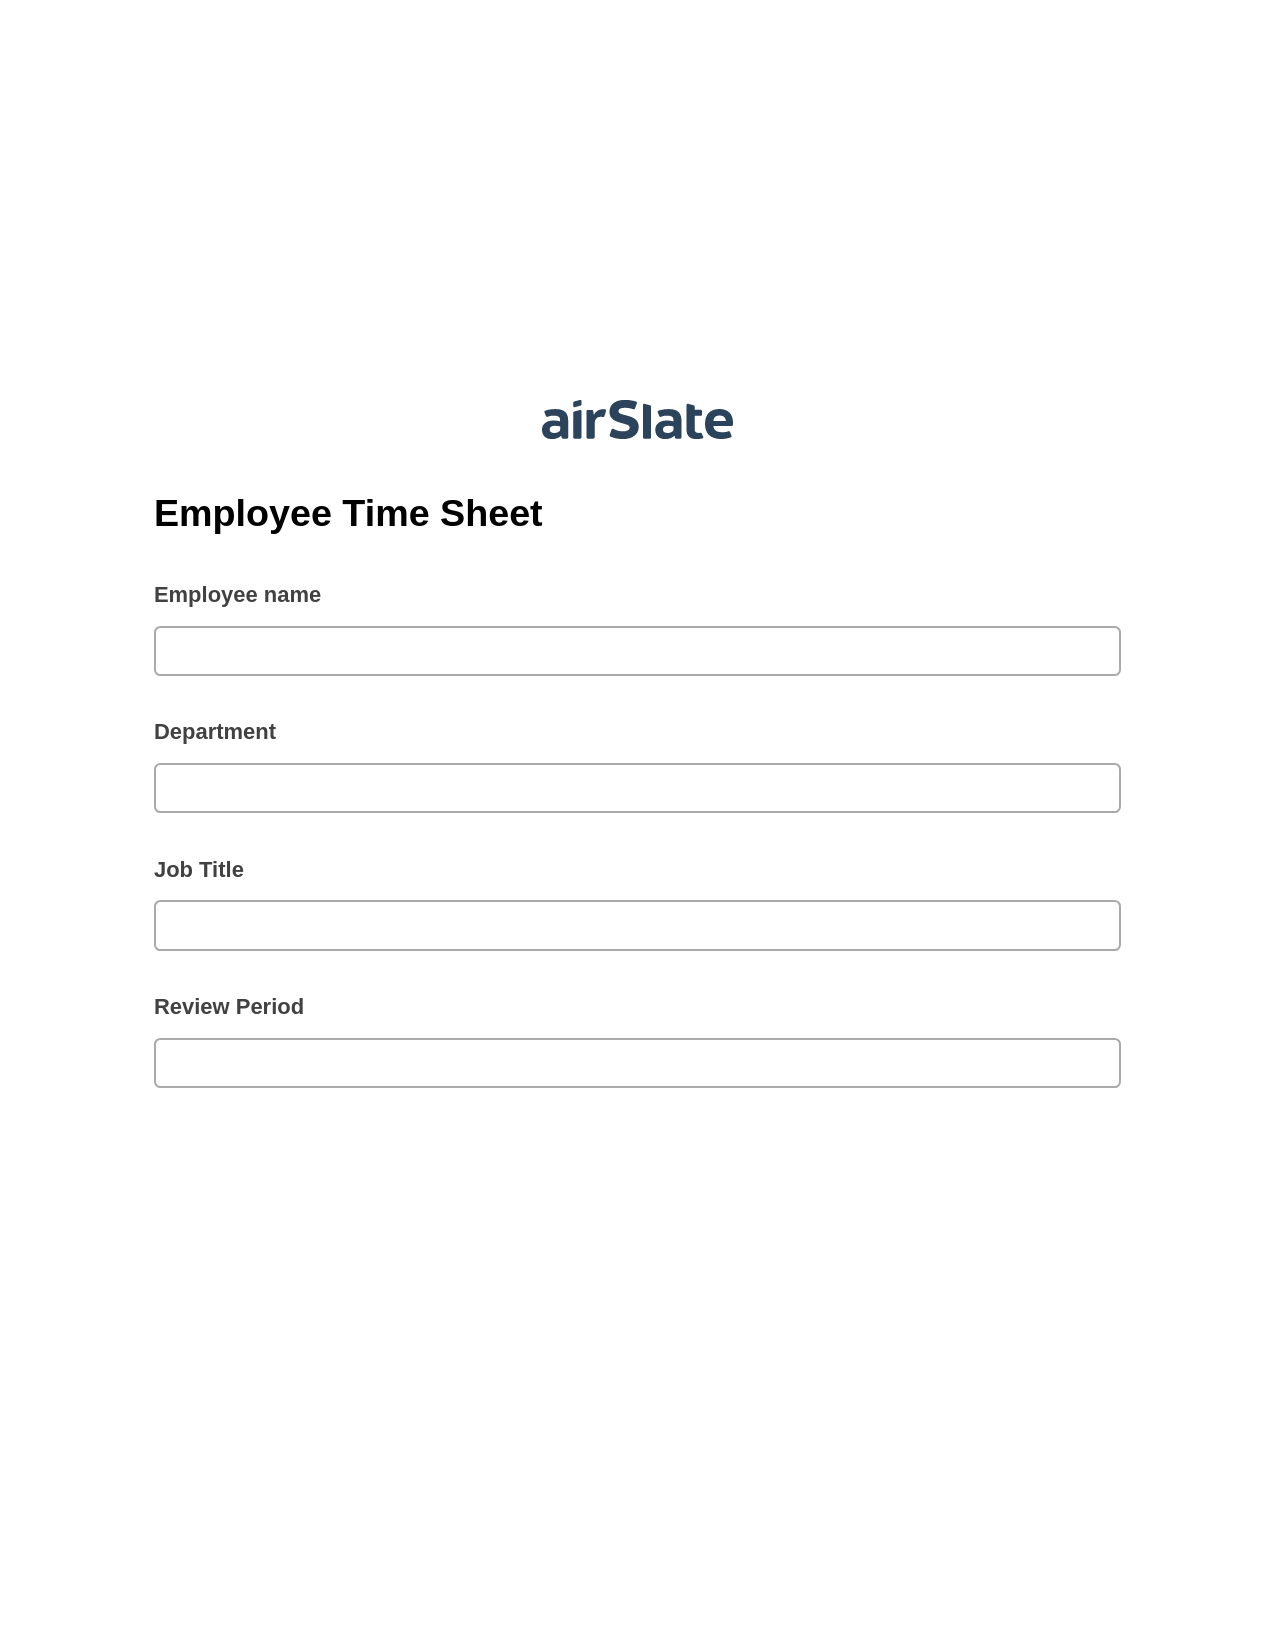 Employee Time Sheet System Bot - Slack Two-Way Binding Bot, Create slate addon, Archive to OneDrive Bot